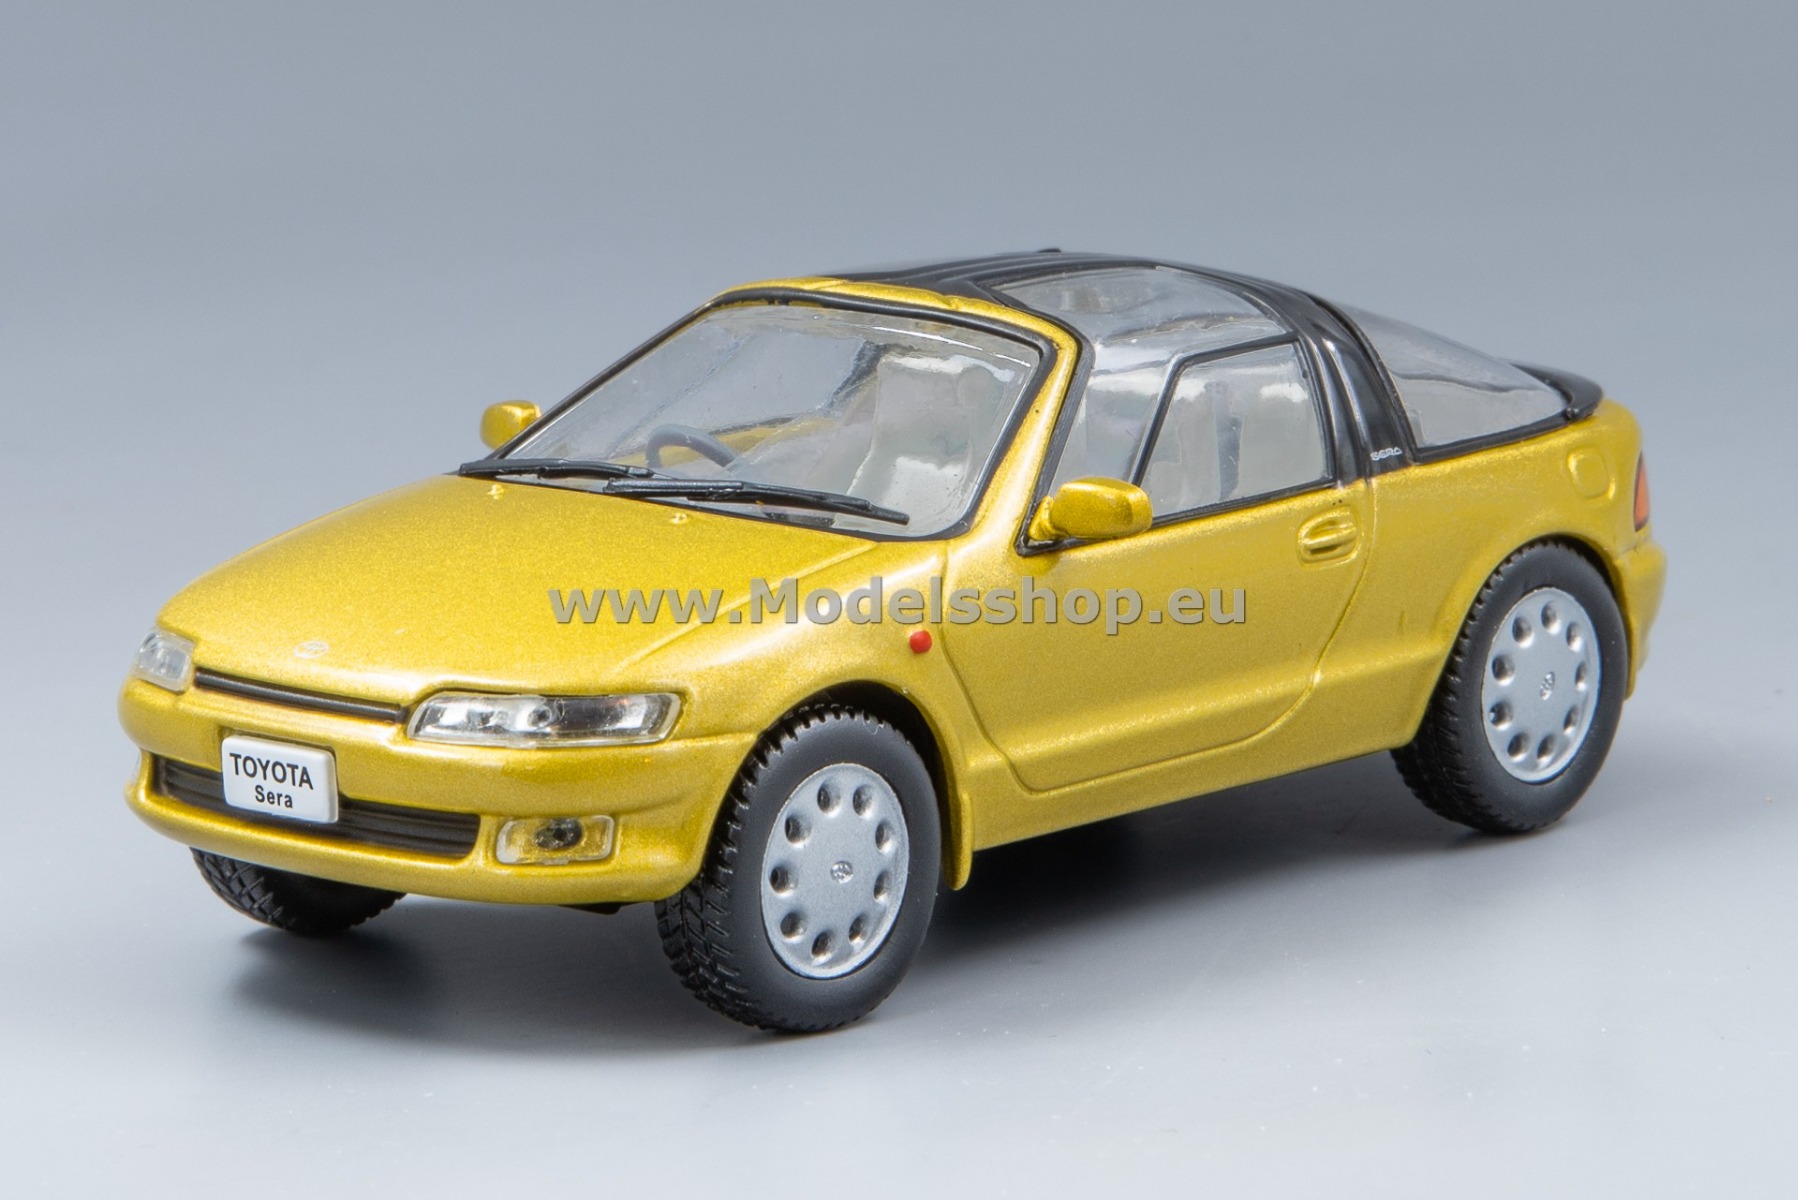 Toyota Sera, 1990, RHD /yellow - metallic/